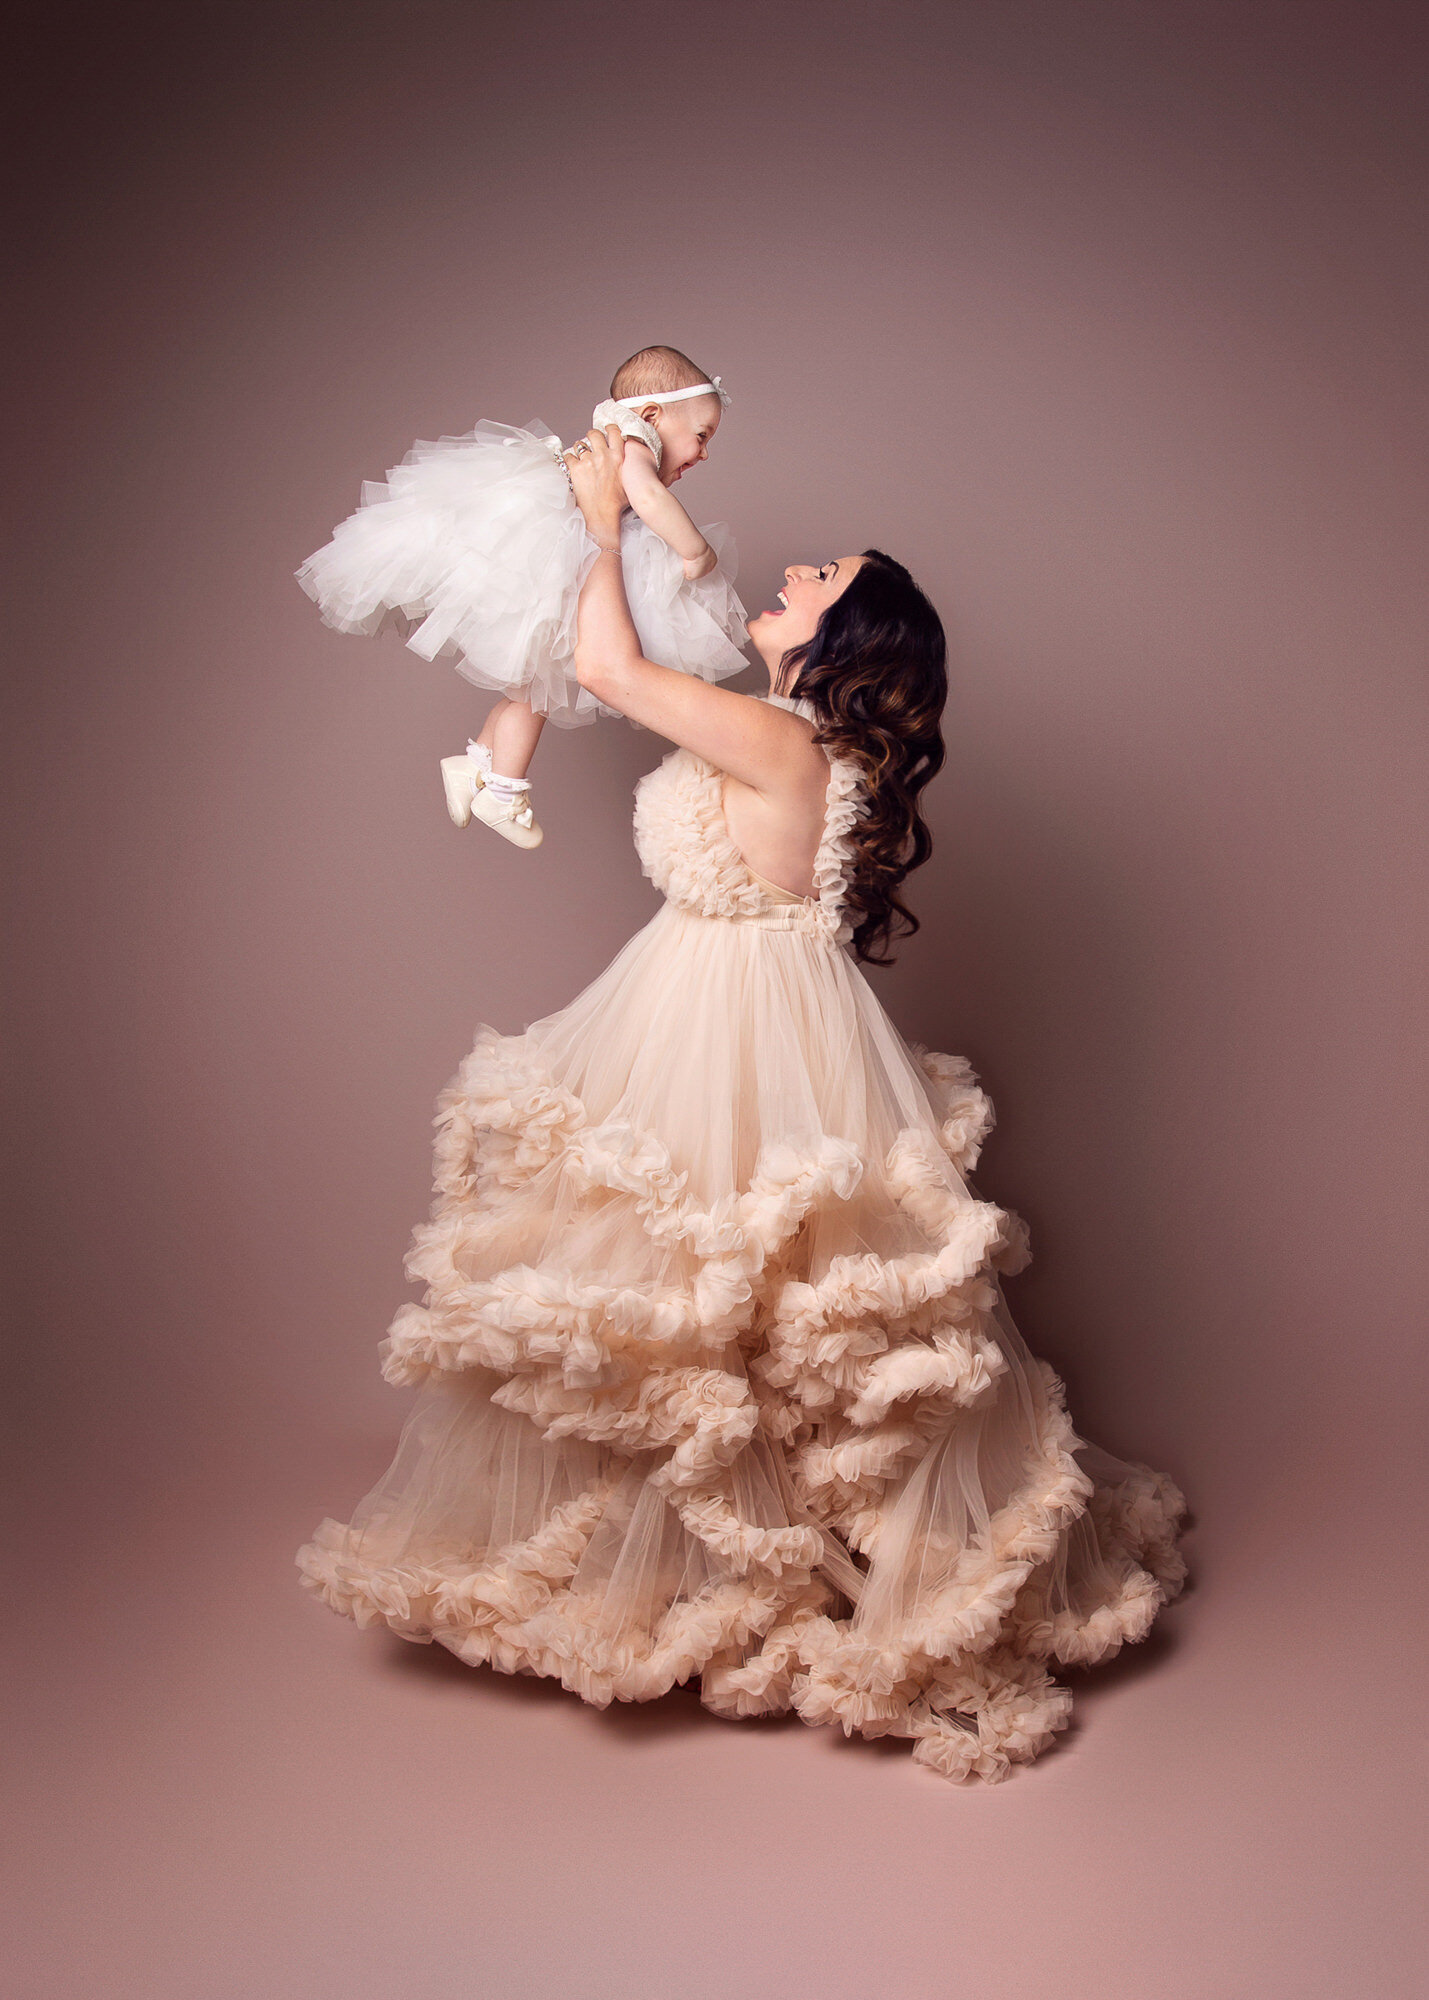 Toronto-motherhood-portrait-photographer-Rosio-Moyano_066